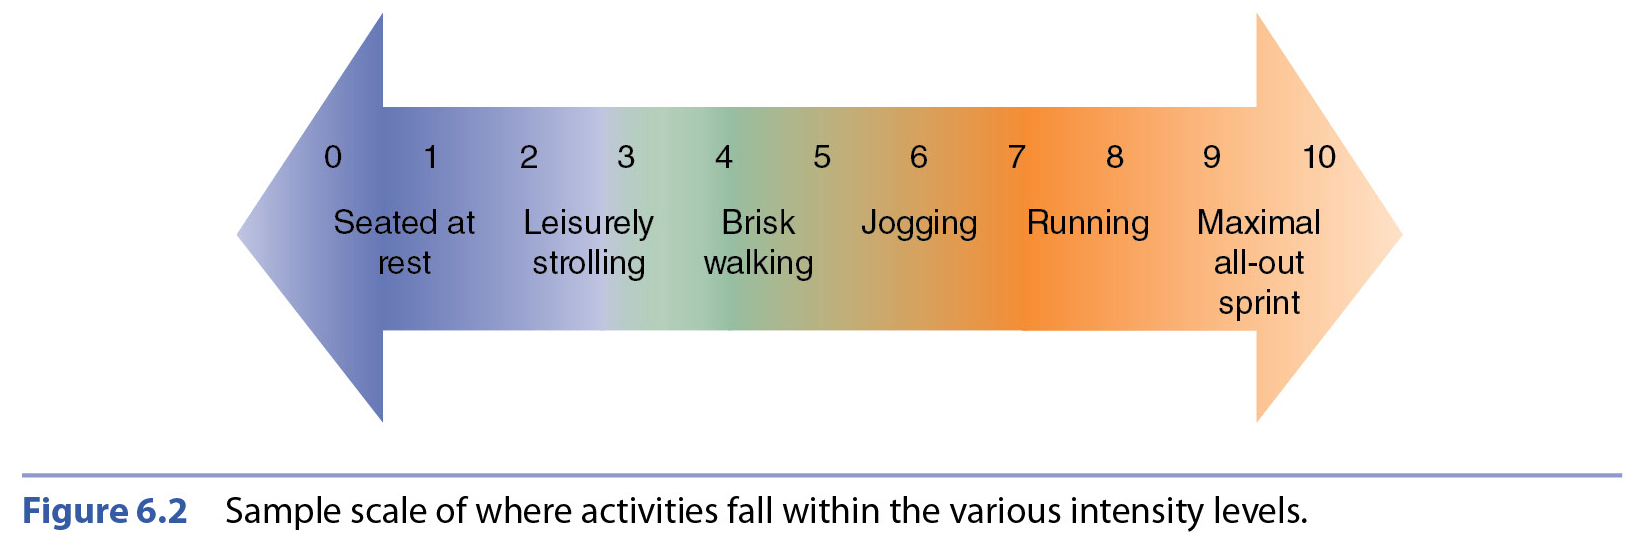 vigorous intensity physical activity definition